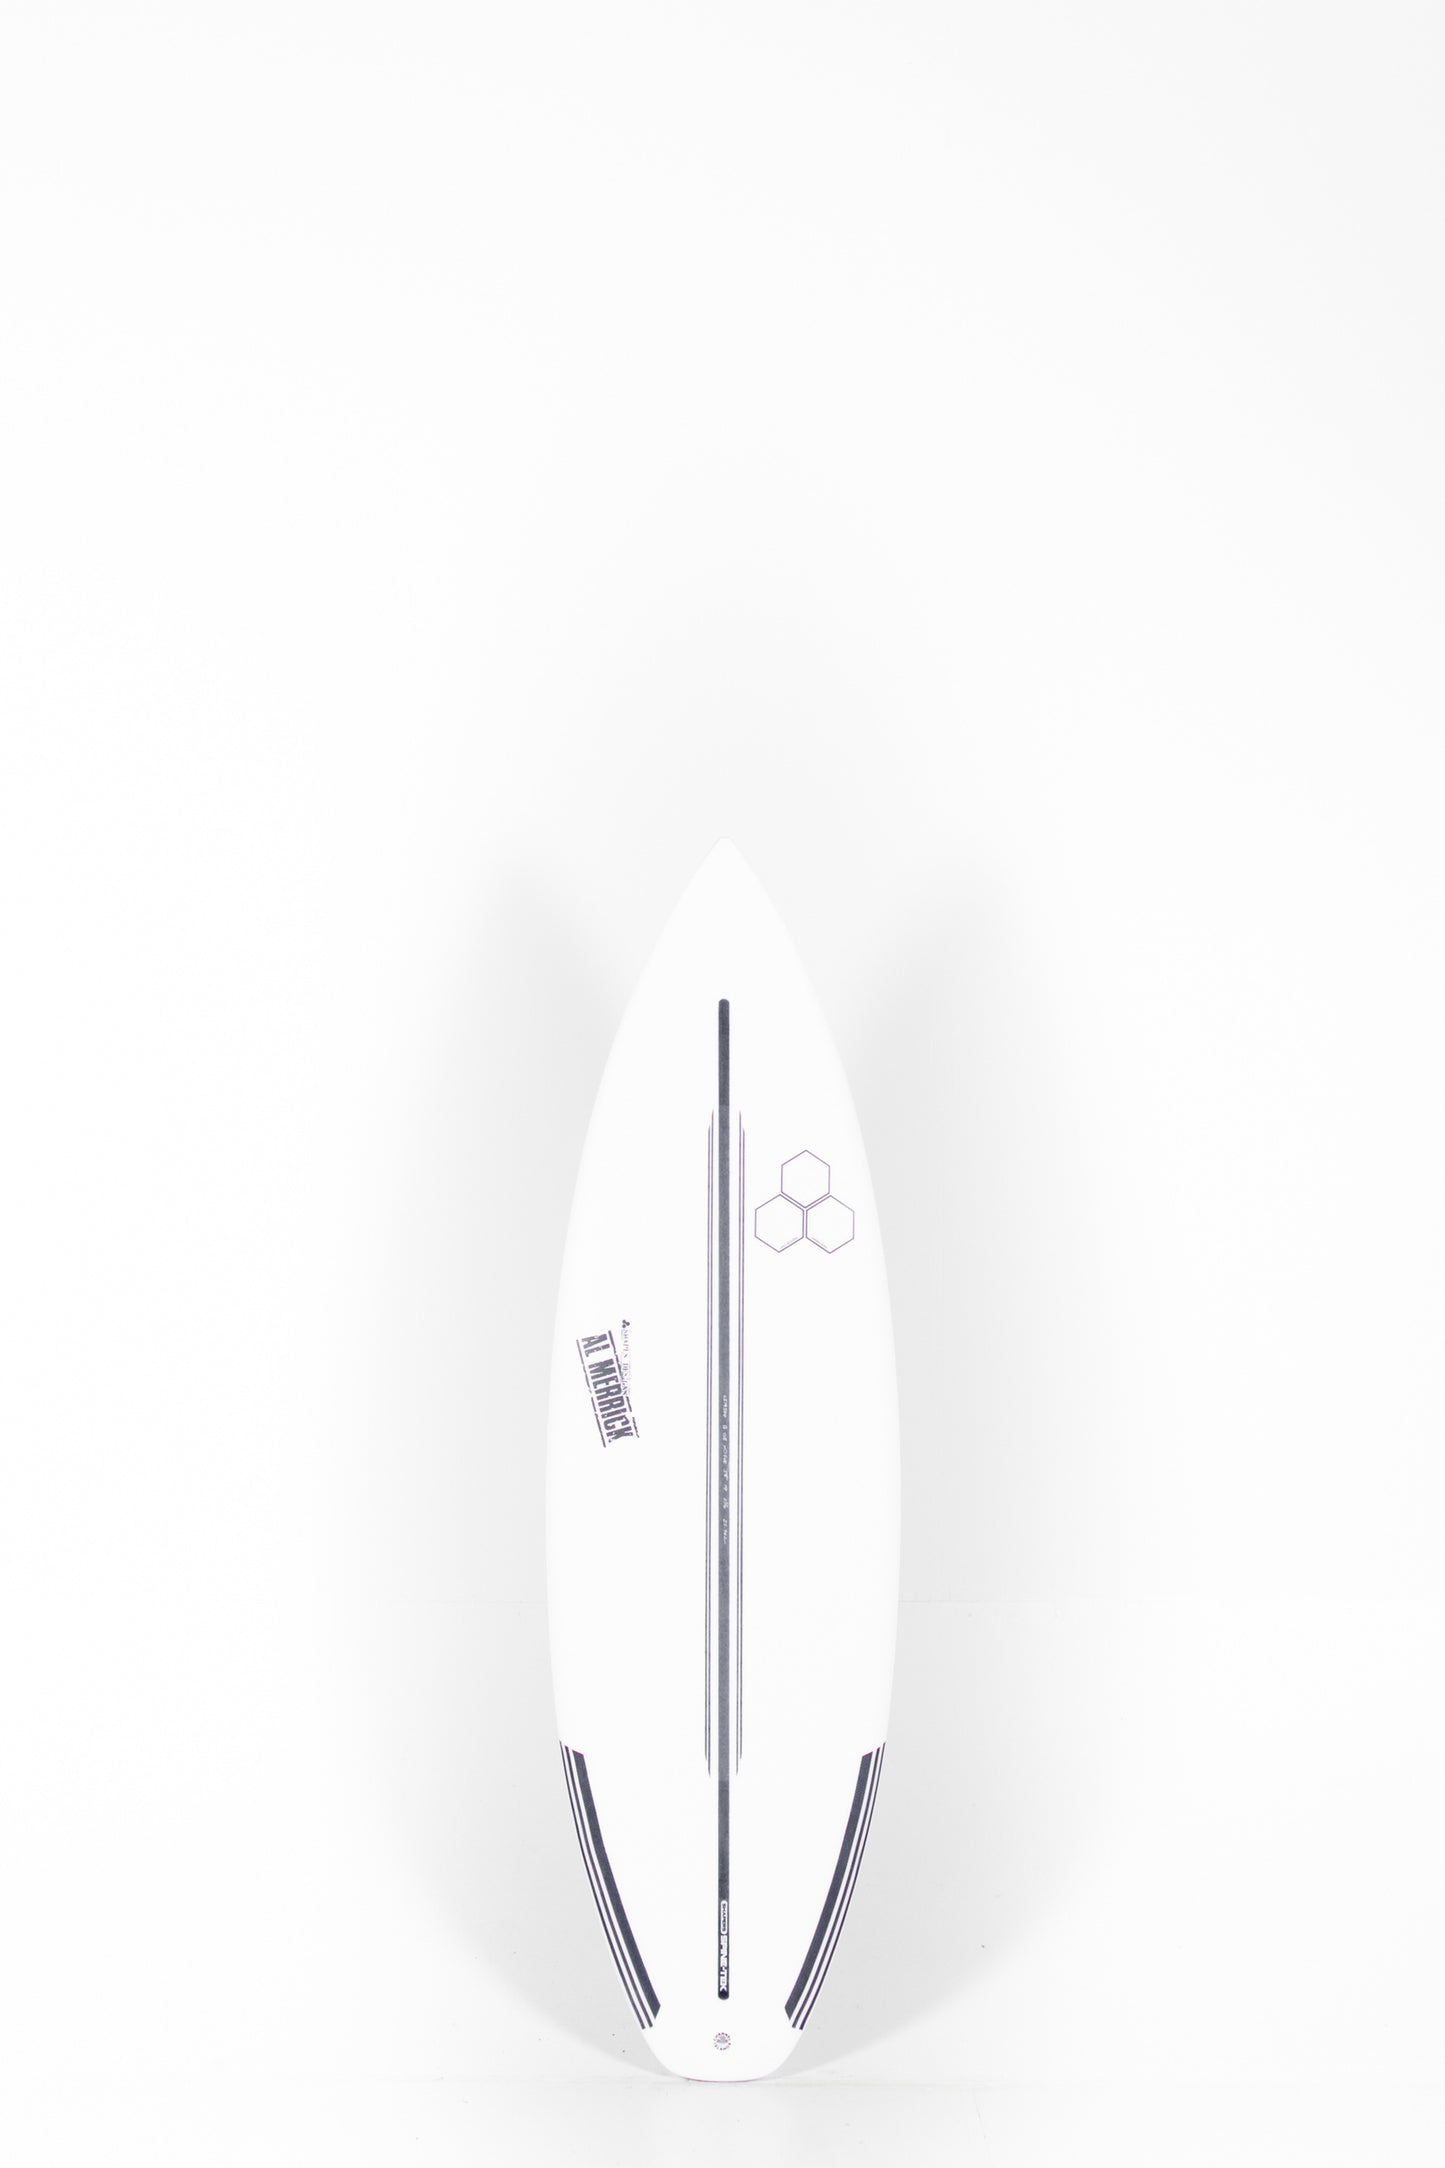 Pukas Surf Shop - Channel Islands - FEVER GROM - Spine Tek - 5’6” x 19 x 2 5/16  - 25,46L - CI19544